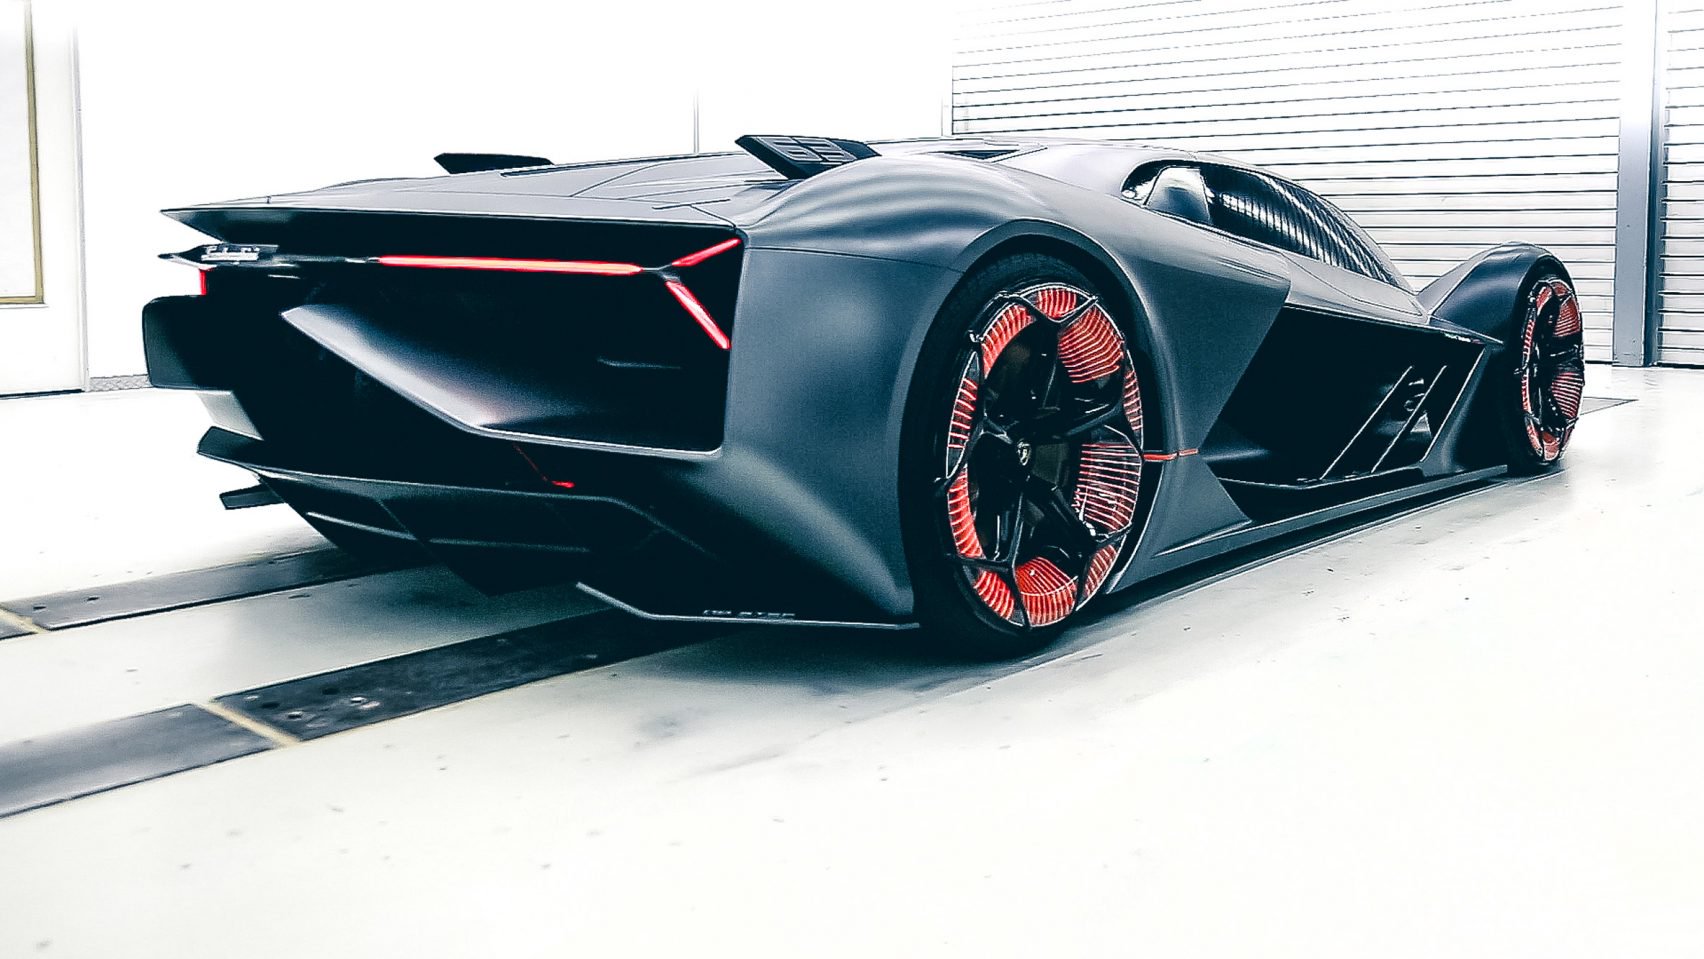 Lamborghini to Collaborate with MIT on Self-Healing Car